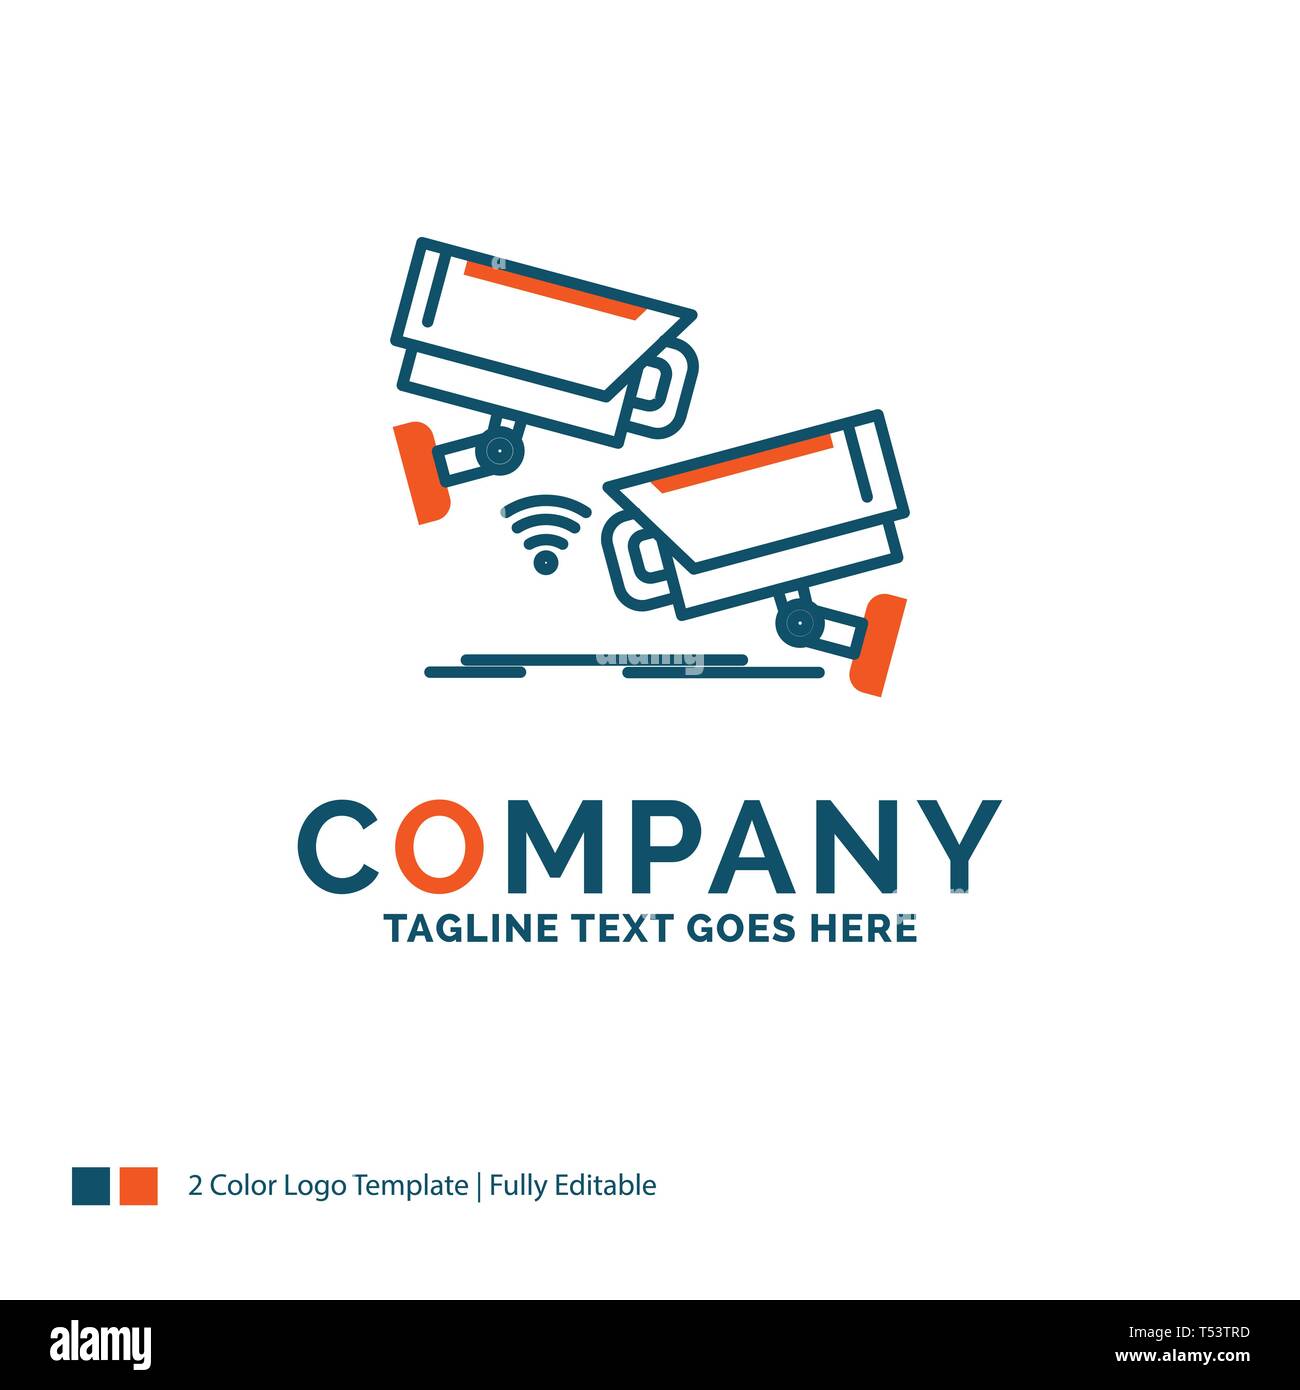 CCTV, Camera, Security, Surveillance, Technology Logo Design. Blue and  Orange Brand Name Design. Place for Tagline. Business Logo template Stock  Vector Image & Art - Alamy